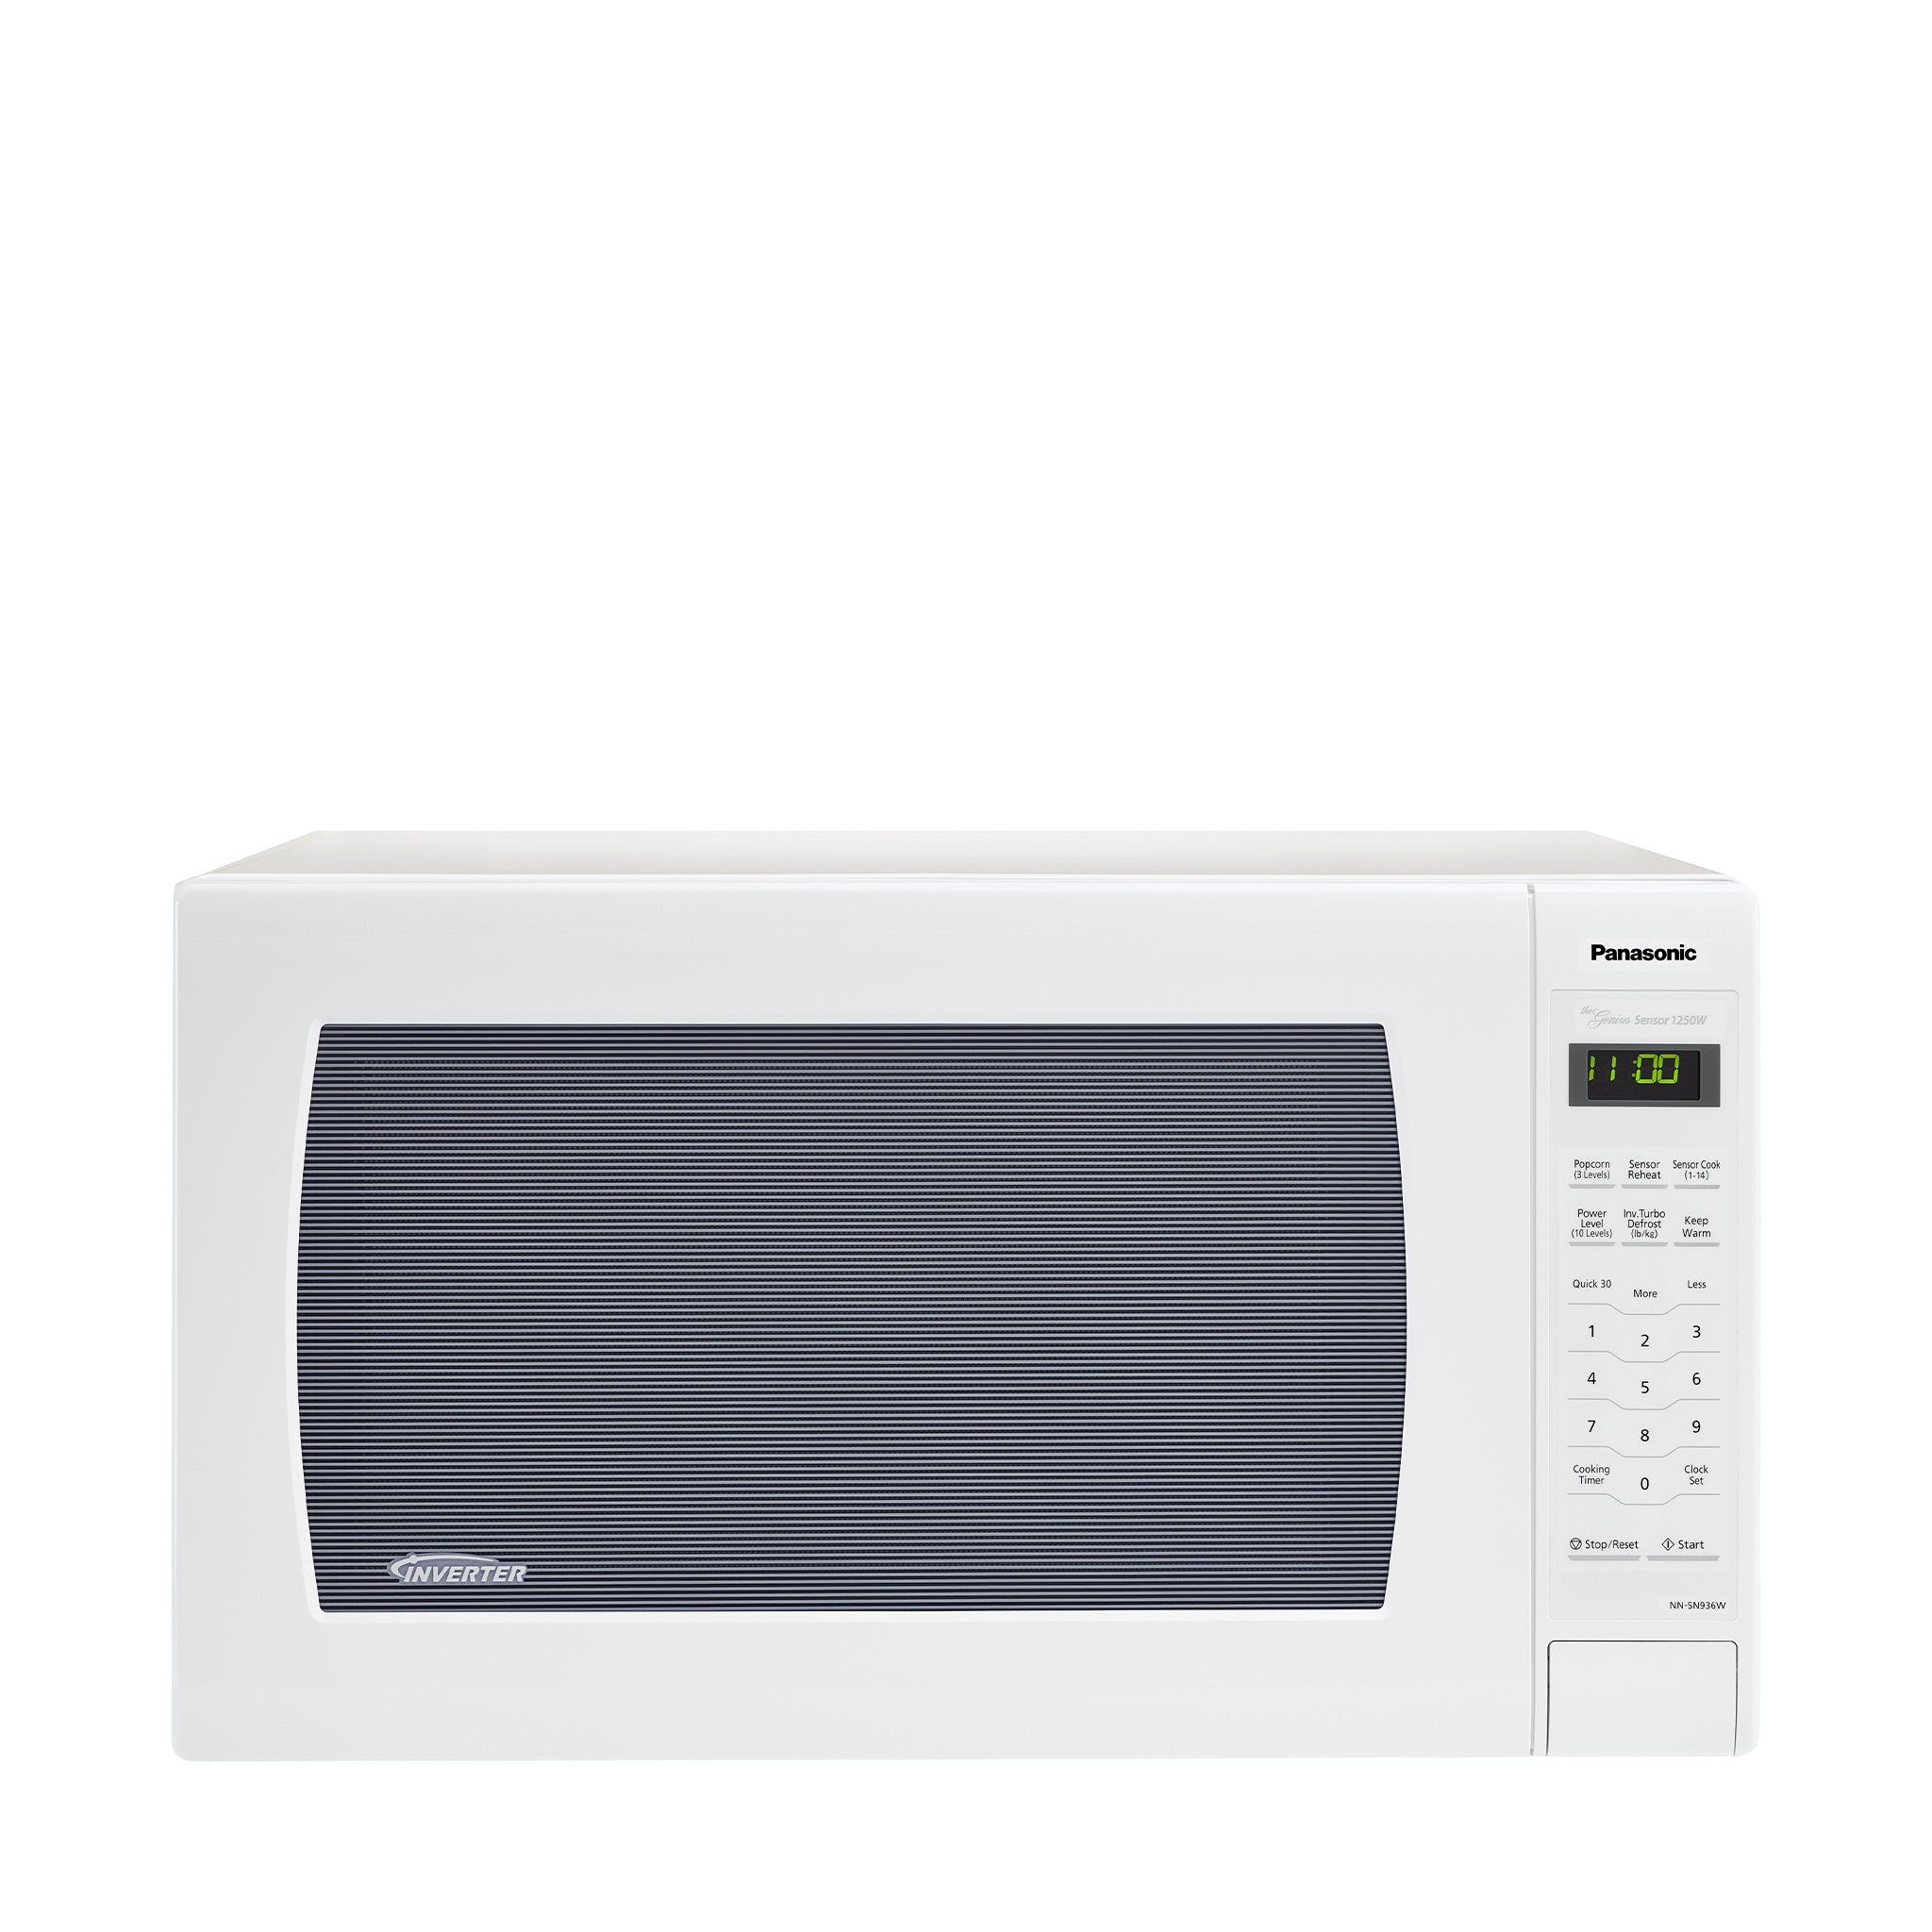 Panasonic NN-T945SF 2.2 cu. ft. 1250W Stainless Steel Microwave Oven